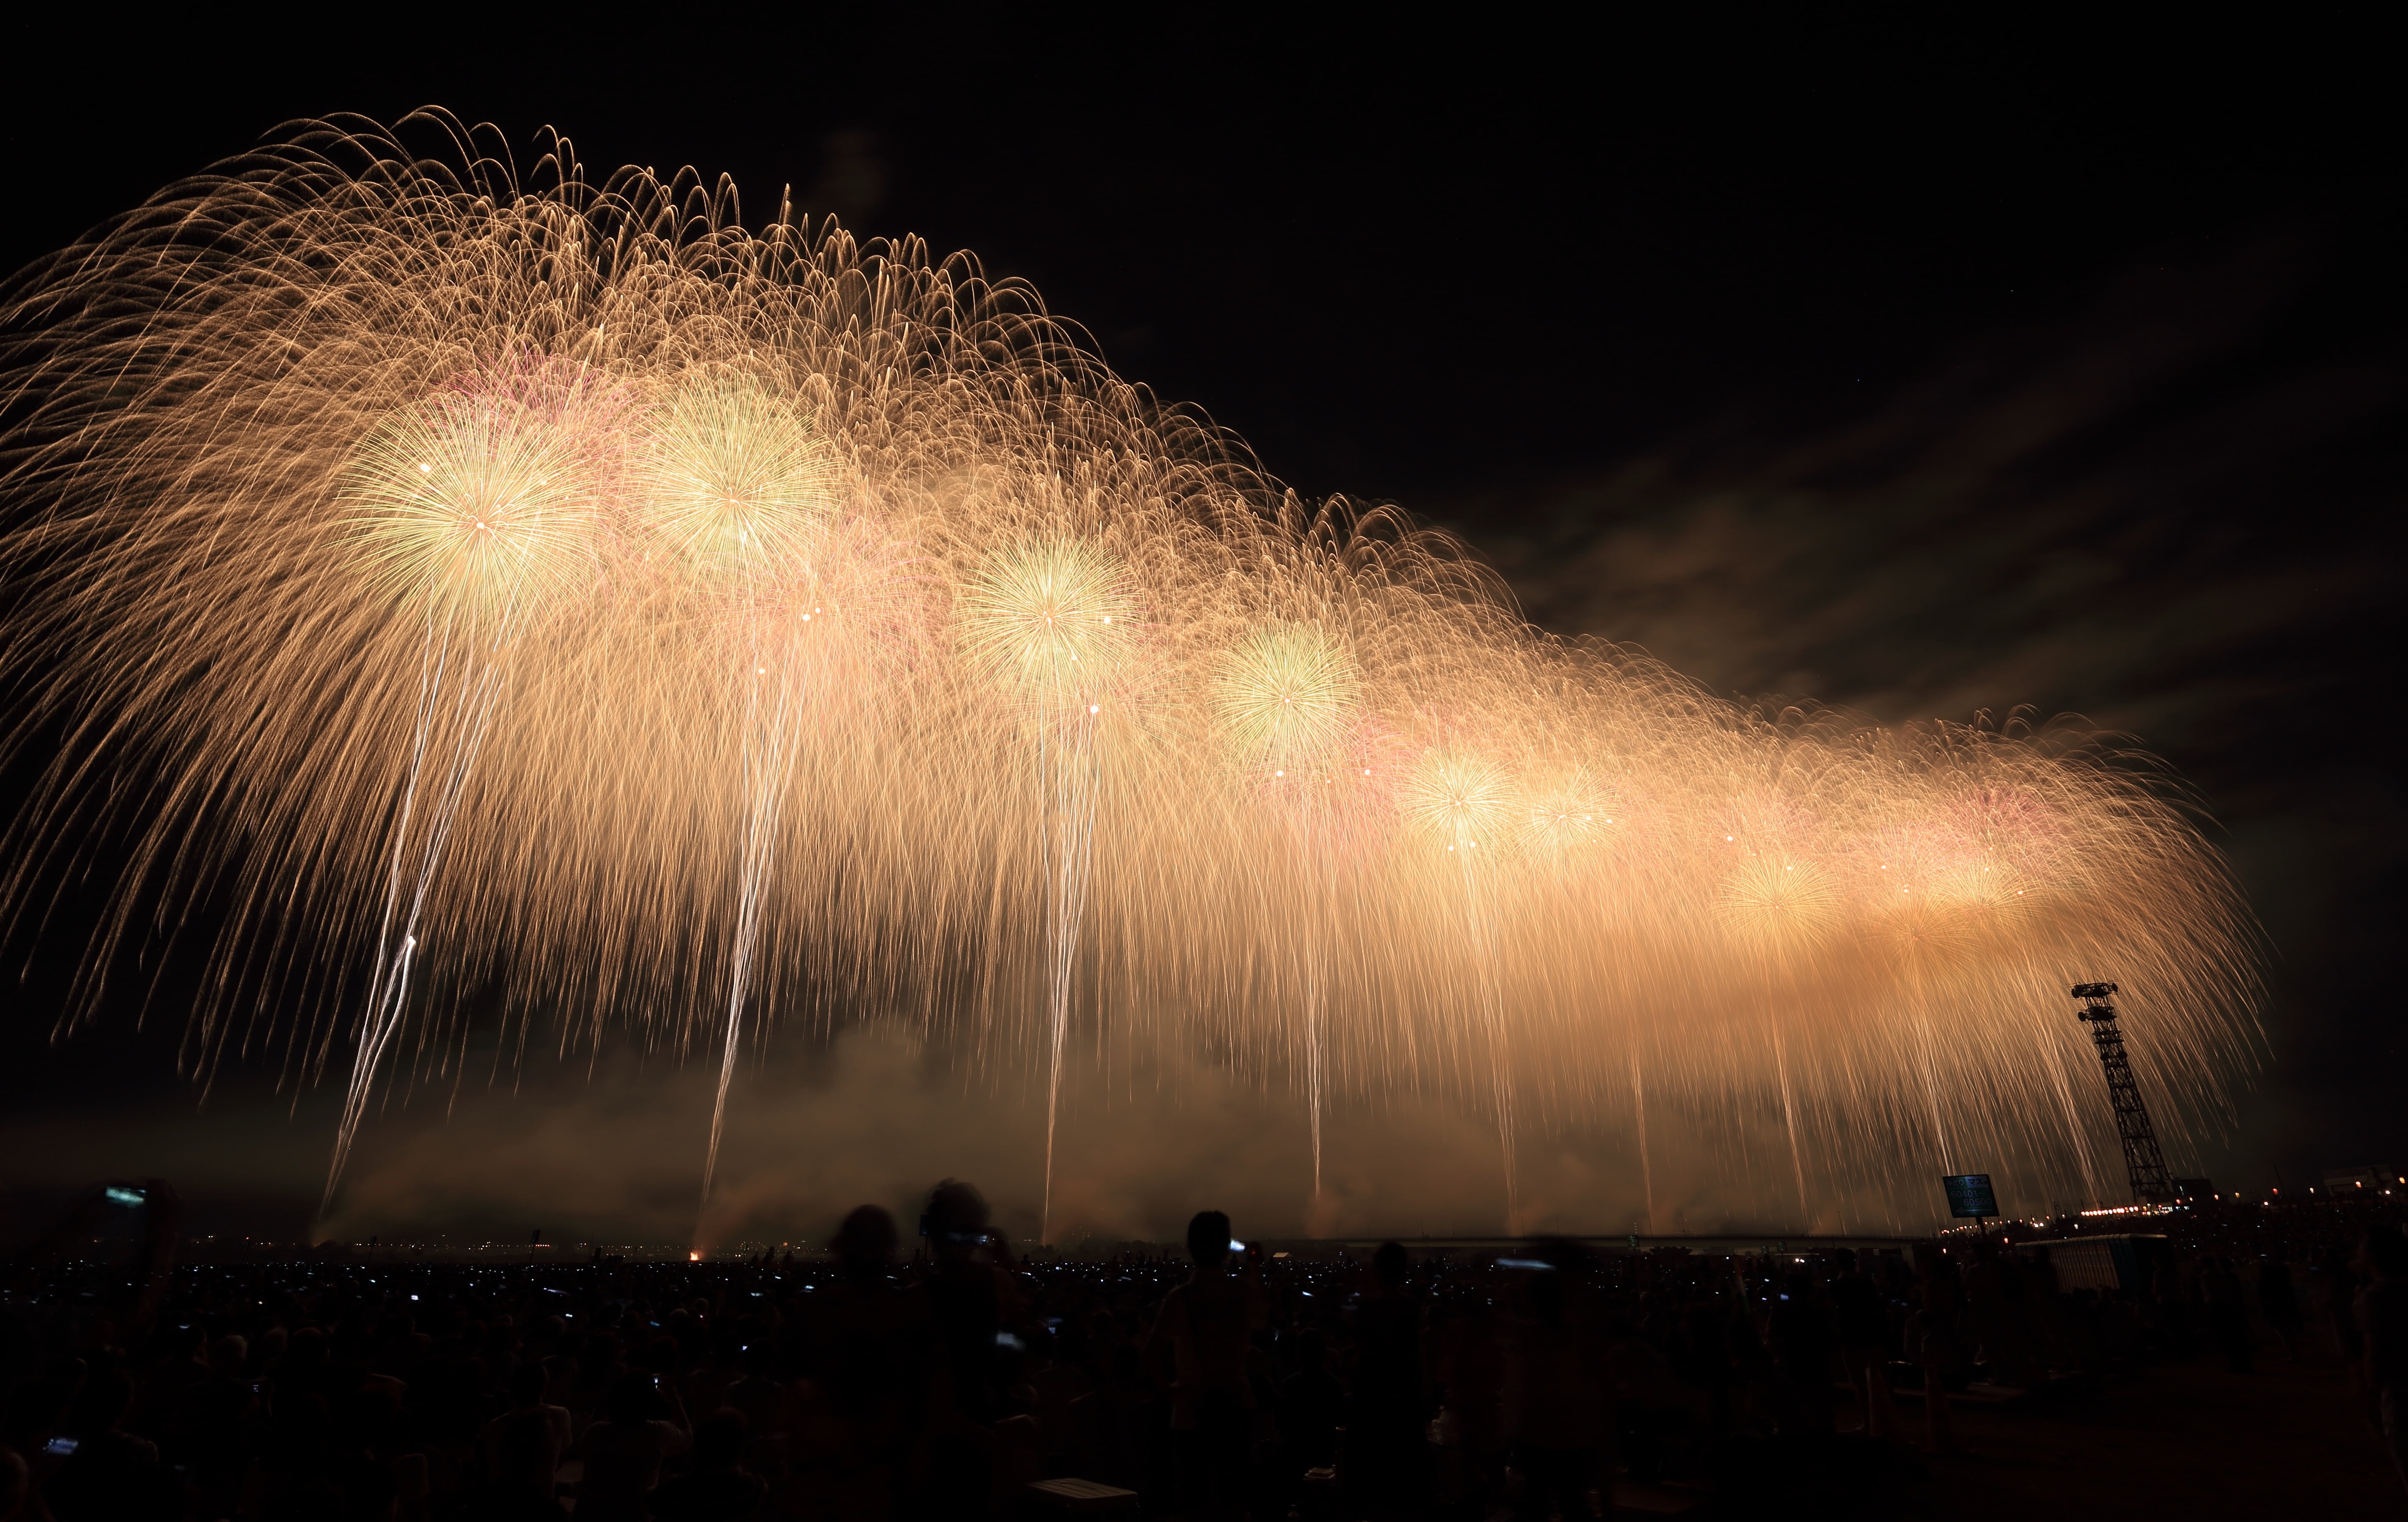 fireworks on sky at nighttime, spark, clouds, nature, smoke, celebration